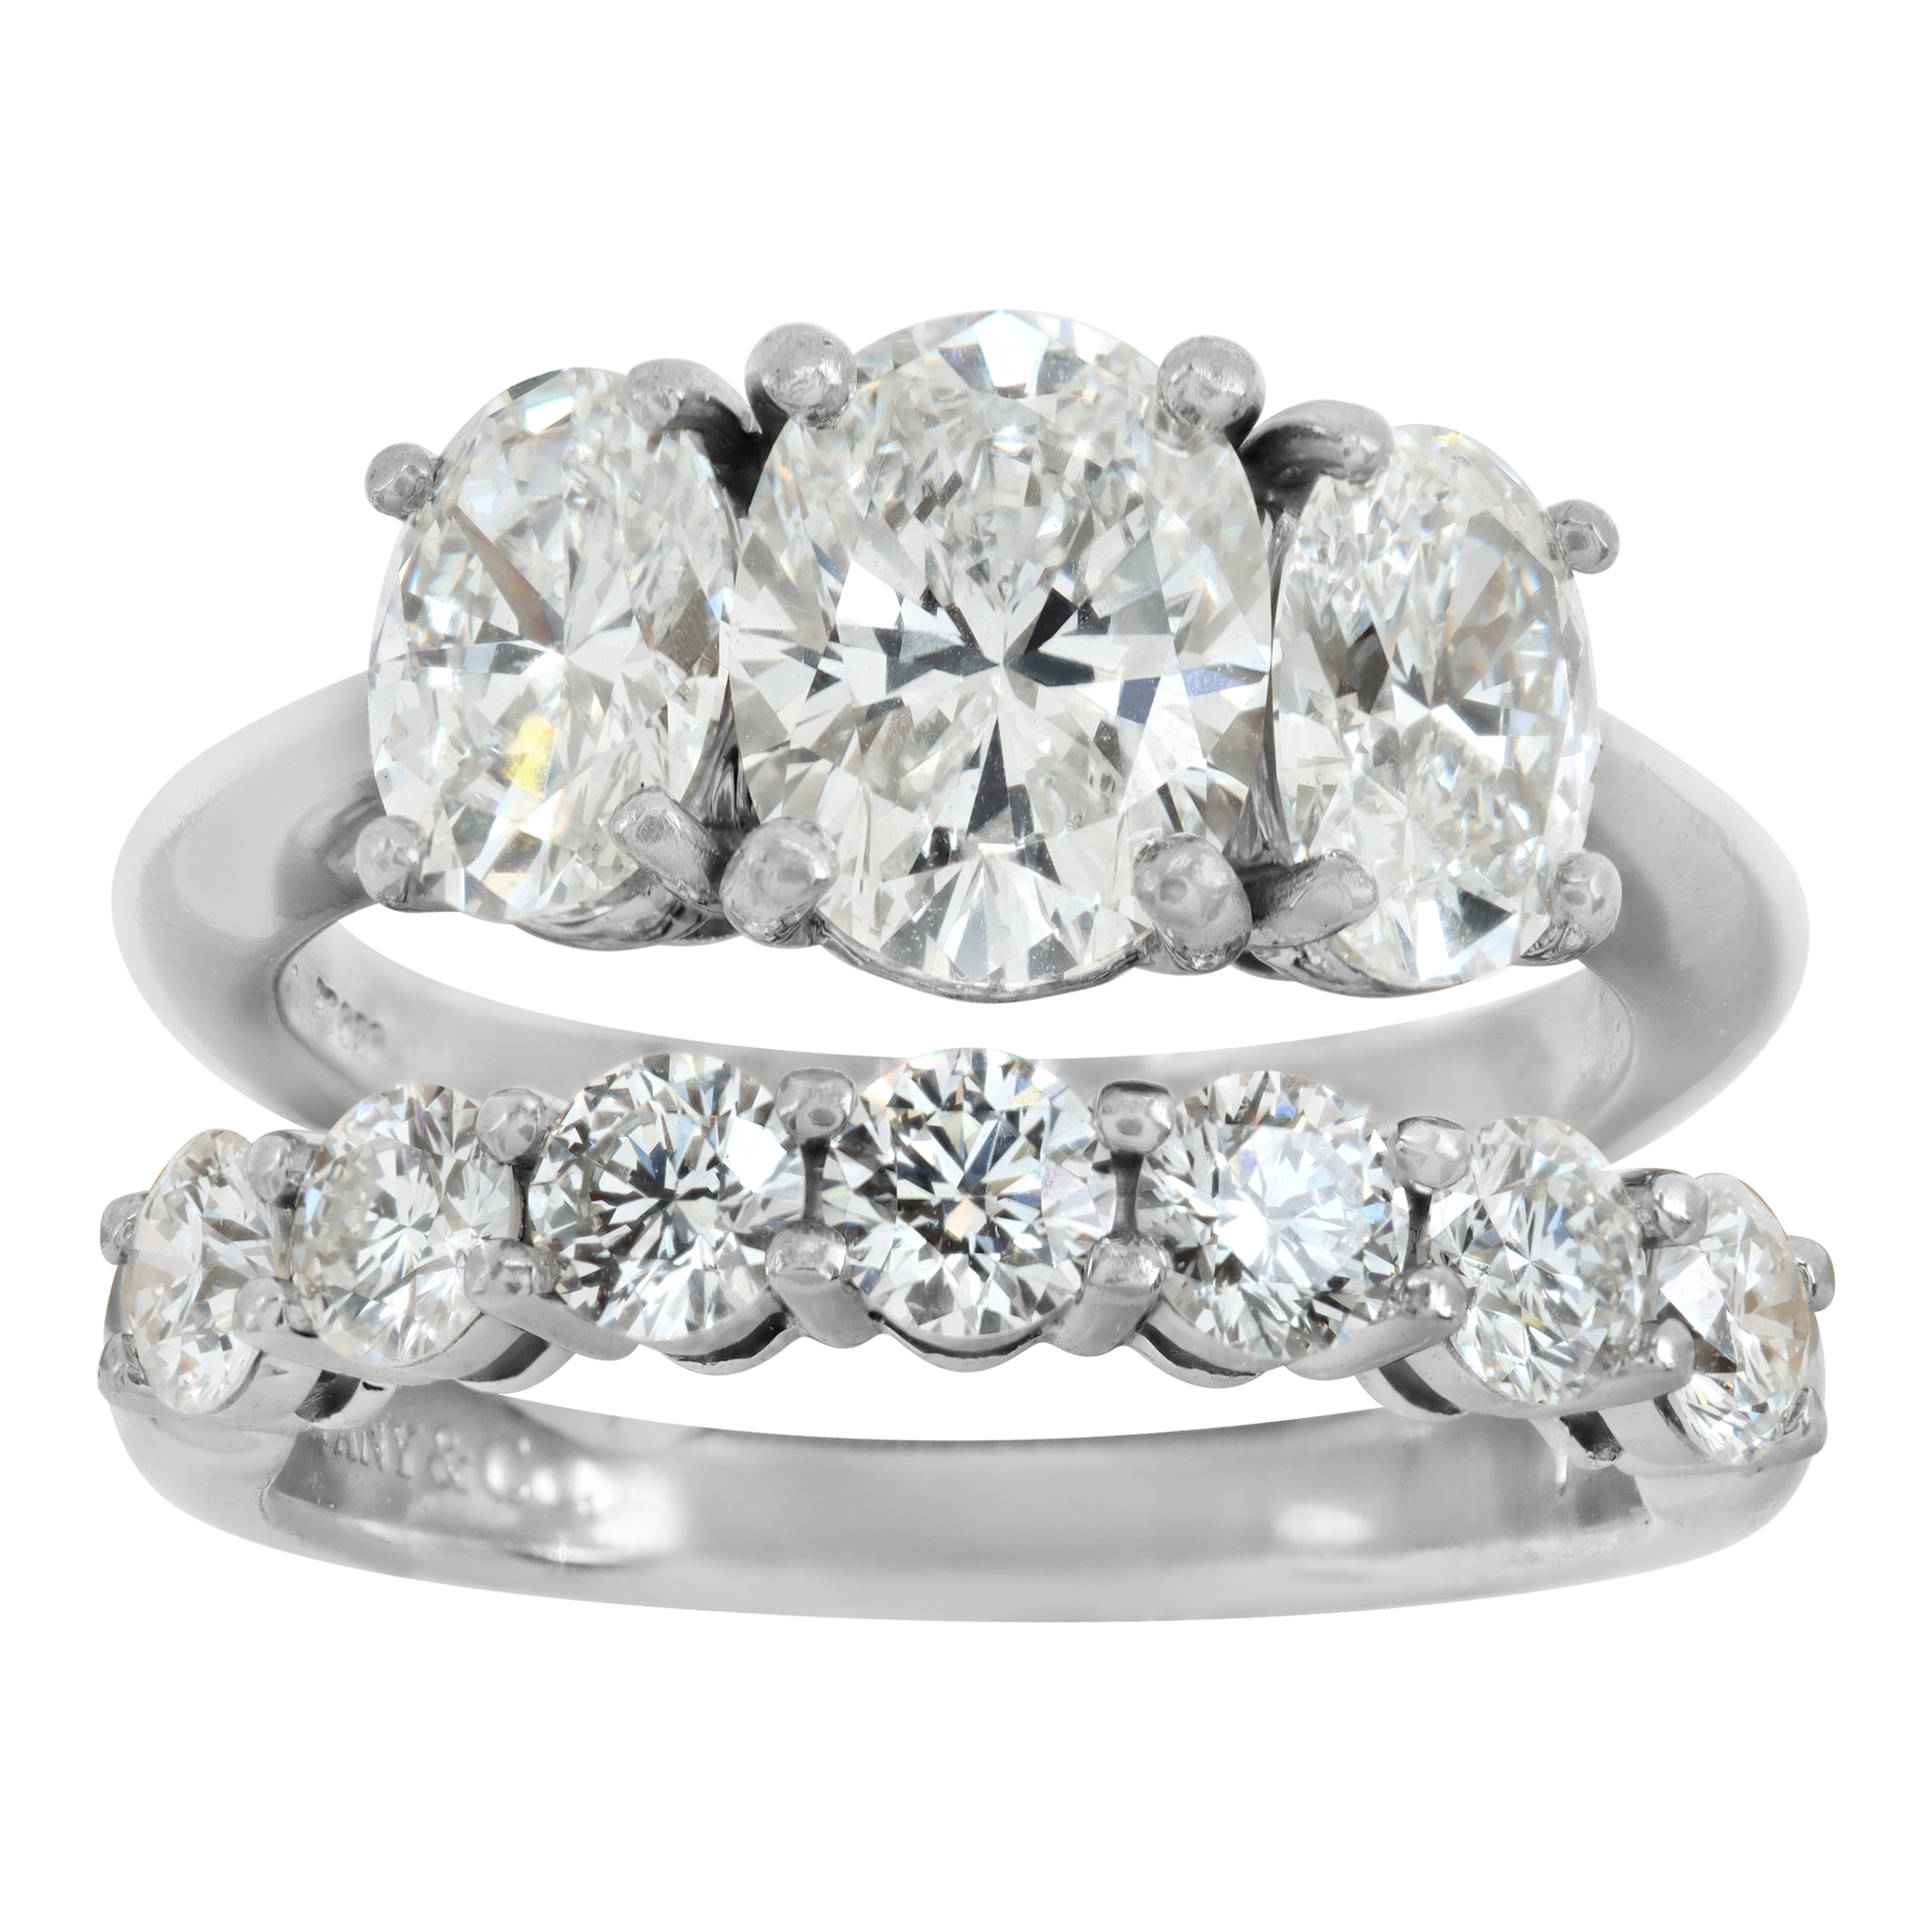 Tiffany & Co. diamond platinum ring set - three stone oval diamond engagment ring and semi eternity wedding band in platinum. (Stones)